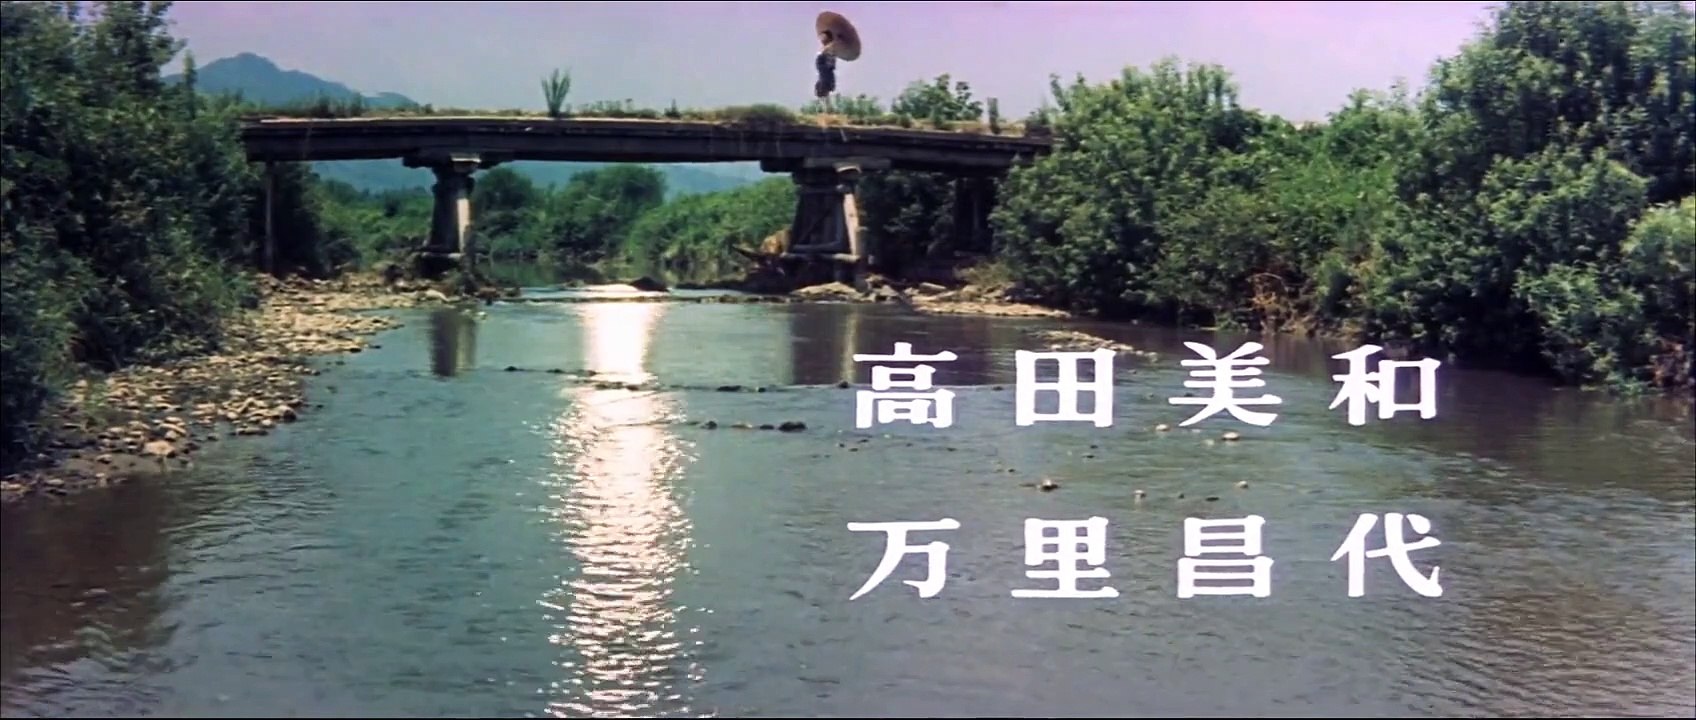 Zatoichi 4 - The Fugitive (1963) stream deutsch anschauen